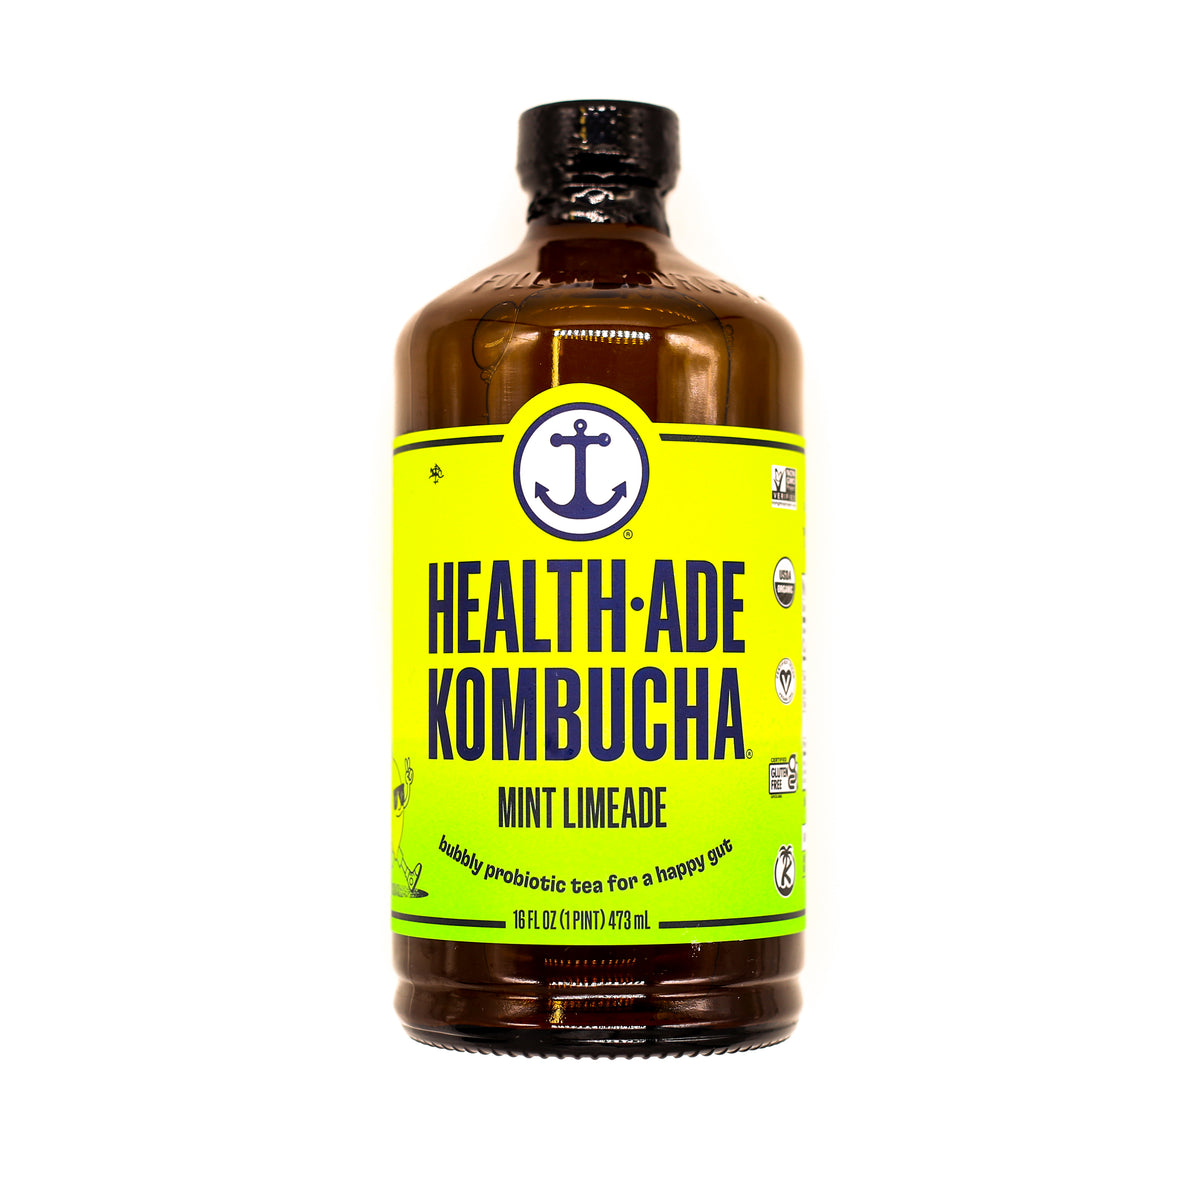 Health Ade Kombucha Mint Limeade